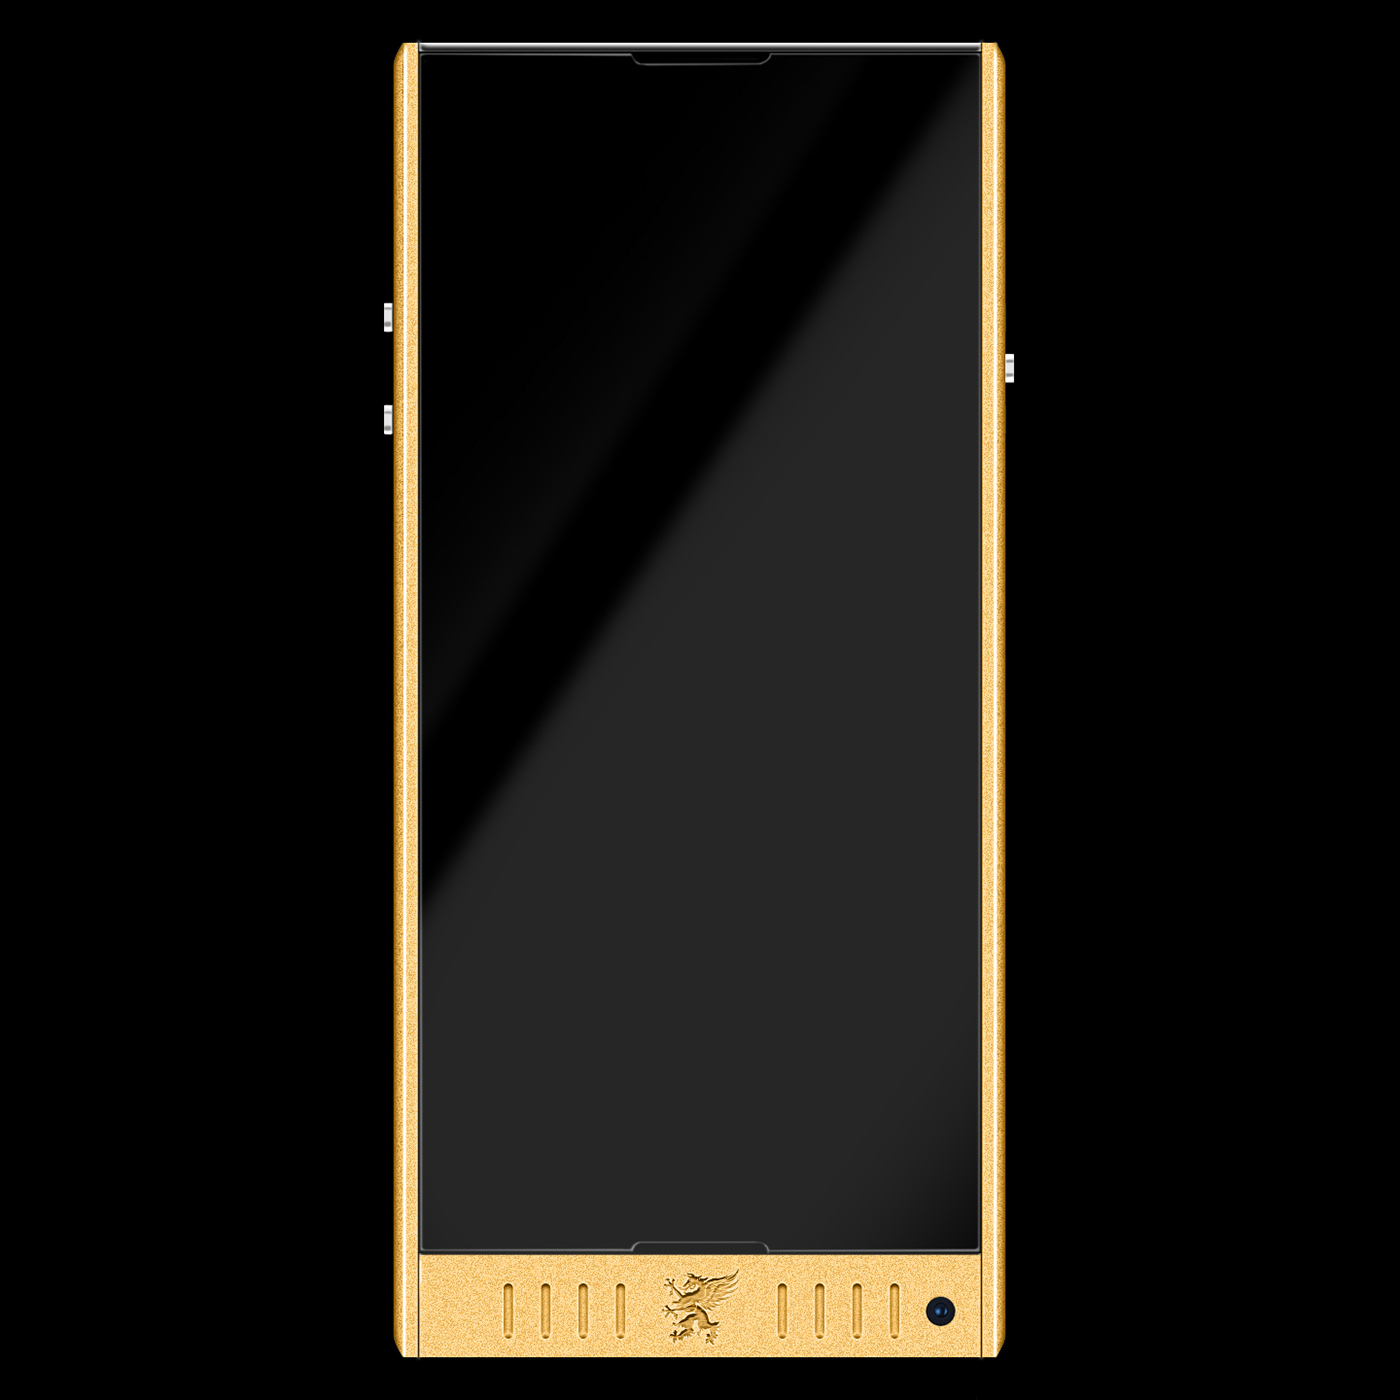 mobiado smartphone concept concept phone luxury mobile art Product concept Tiant